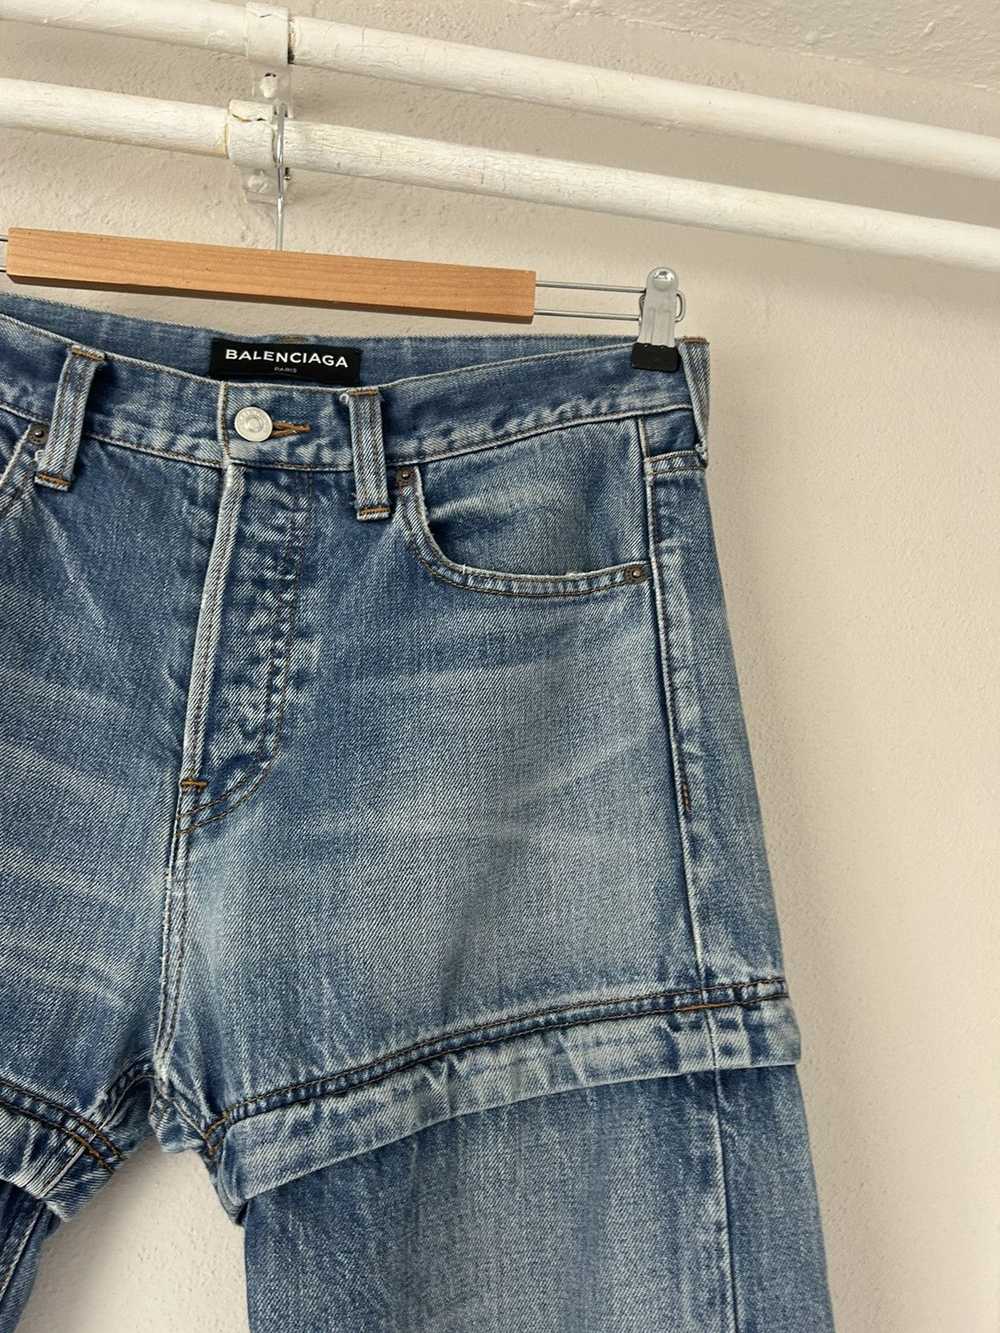 Balenciaga SS18 Convertible Denim Jeans - image 4